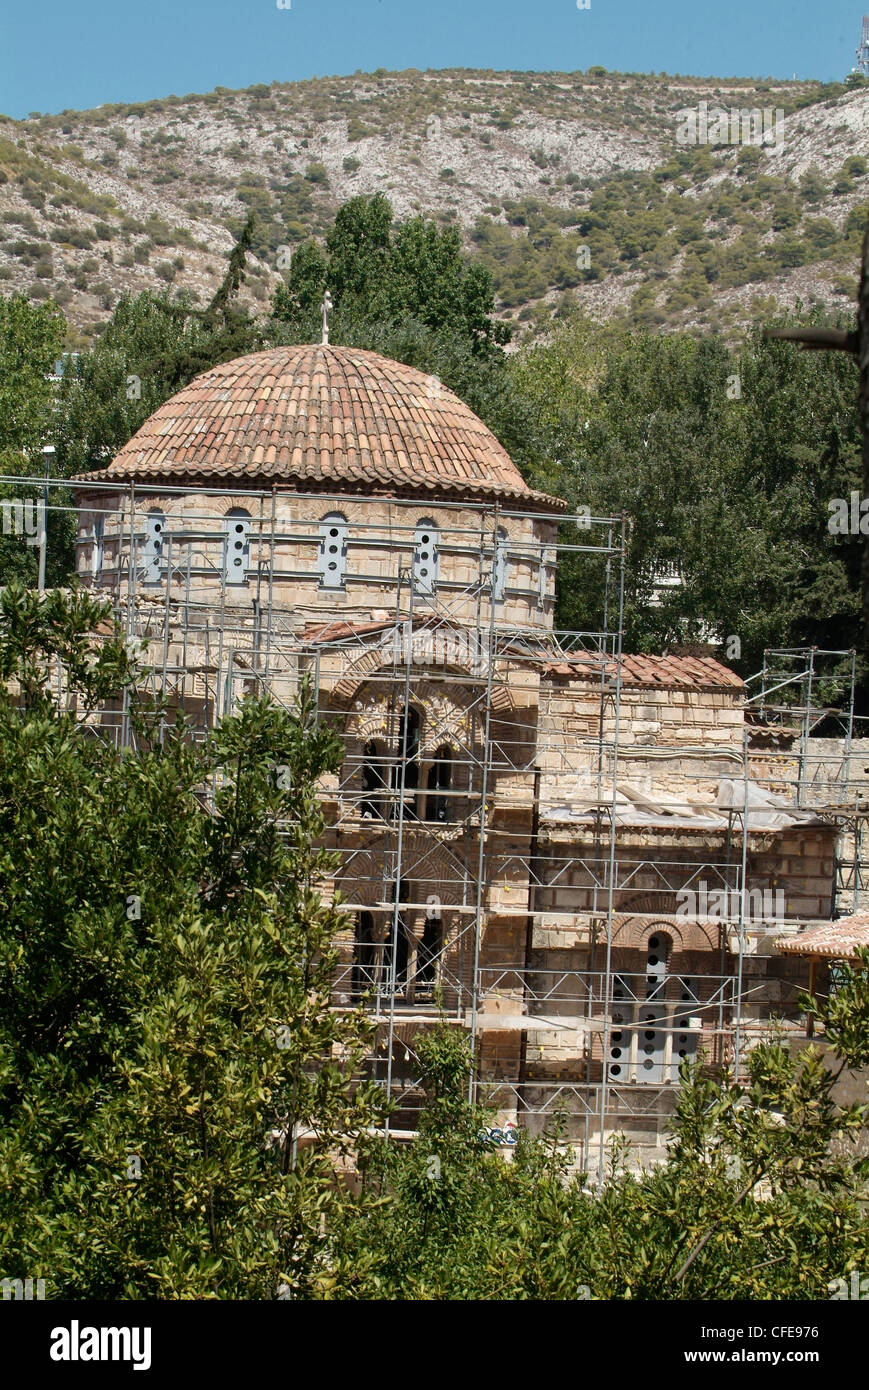 Athens The Monastery Church of Daphni - currently undergoing major refurbishment Stock Photo